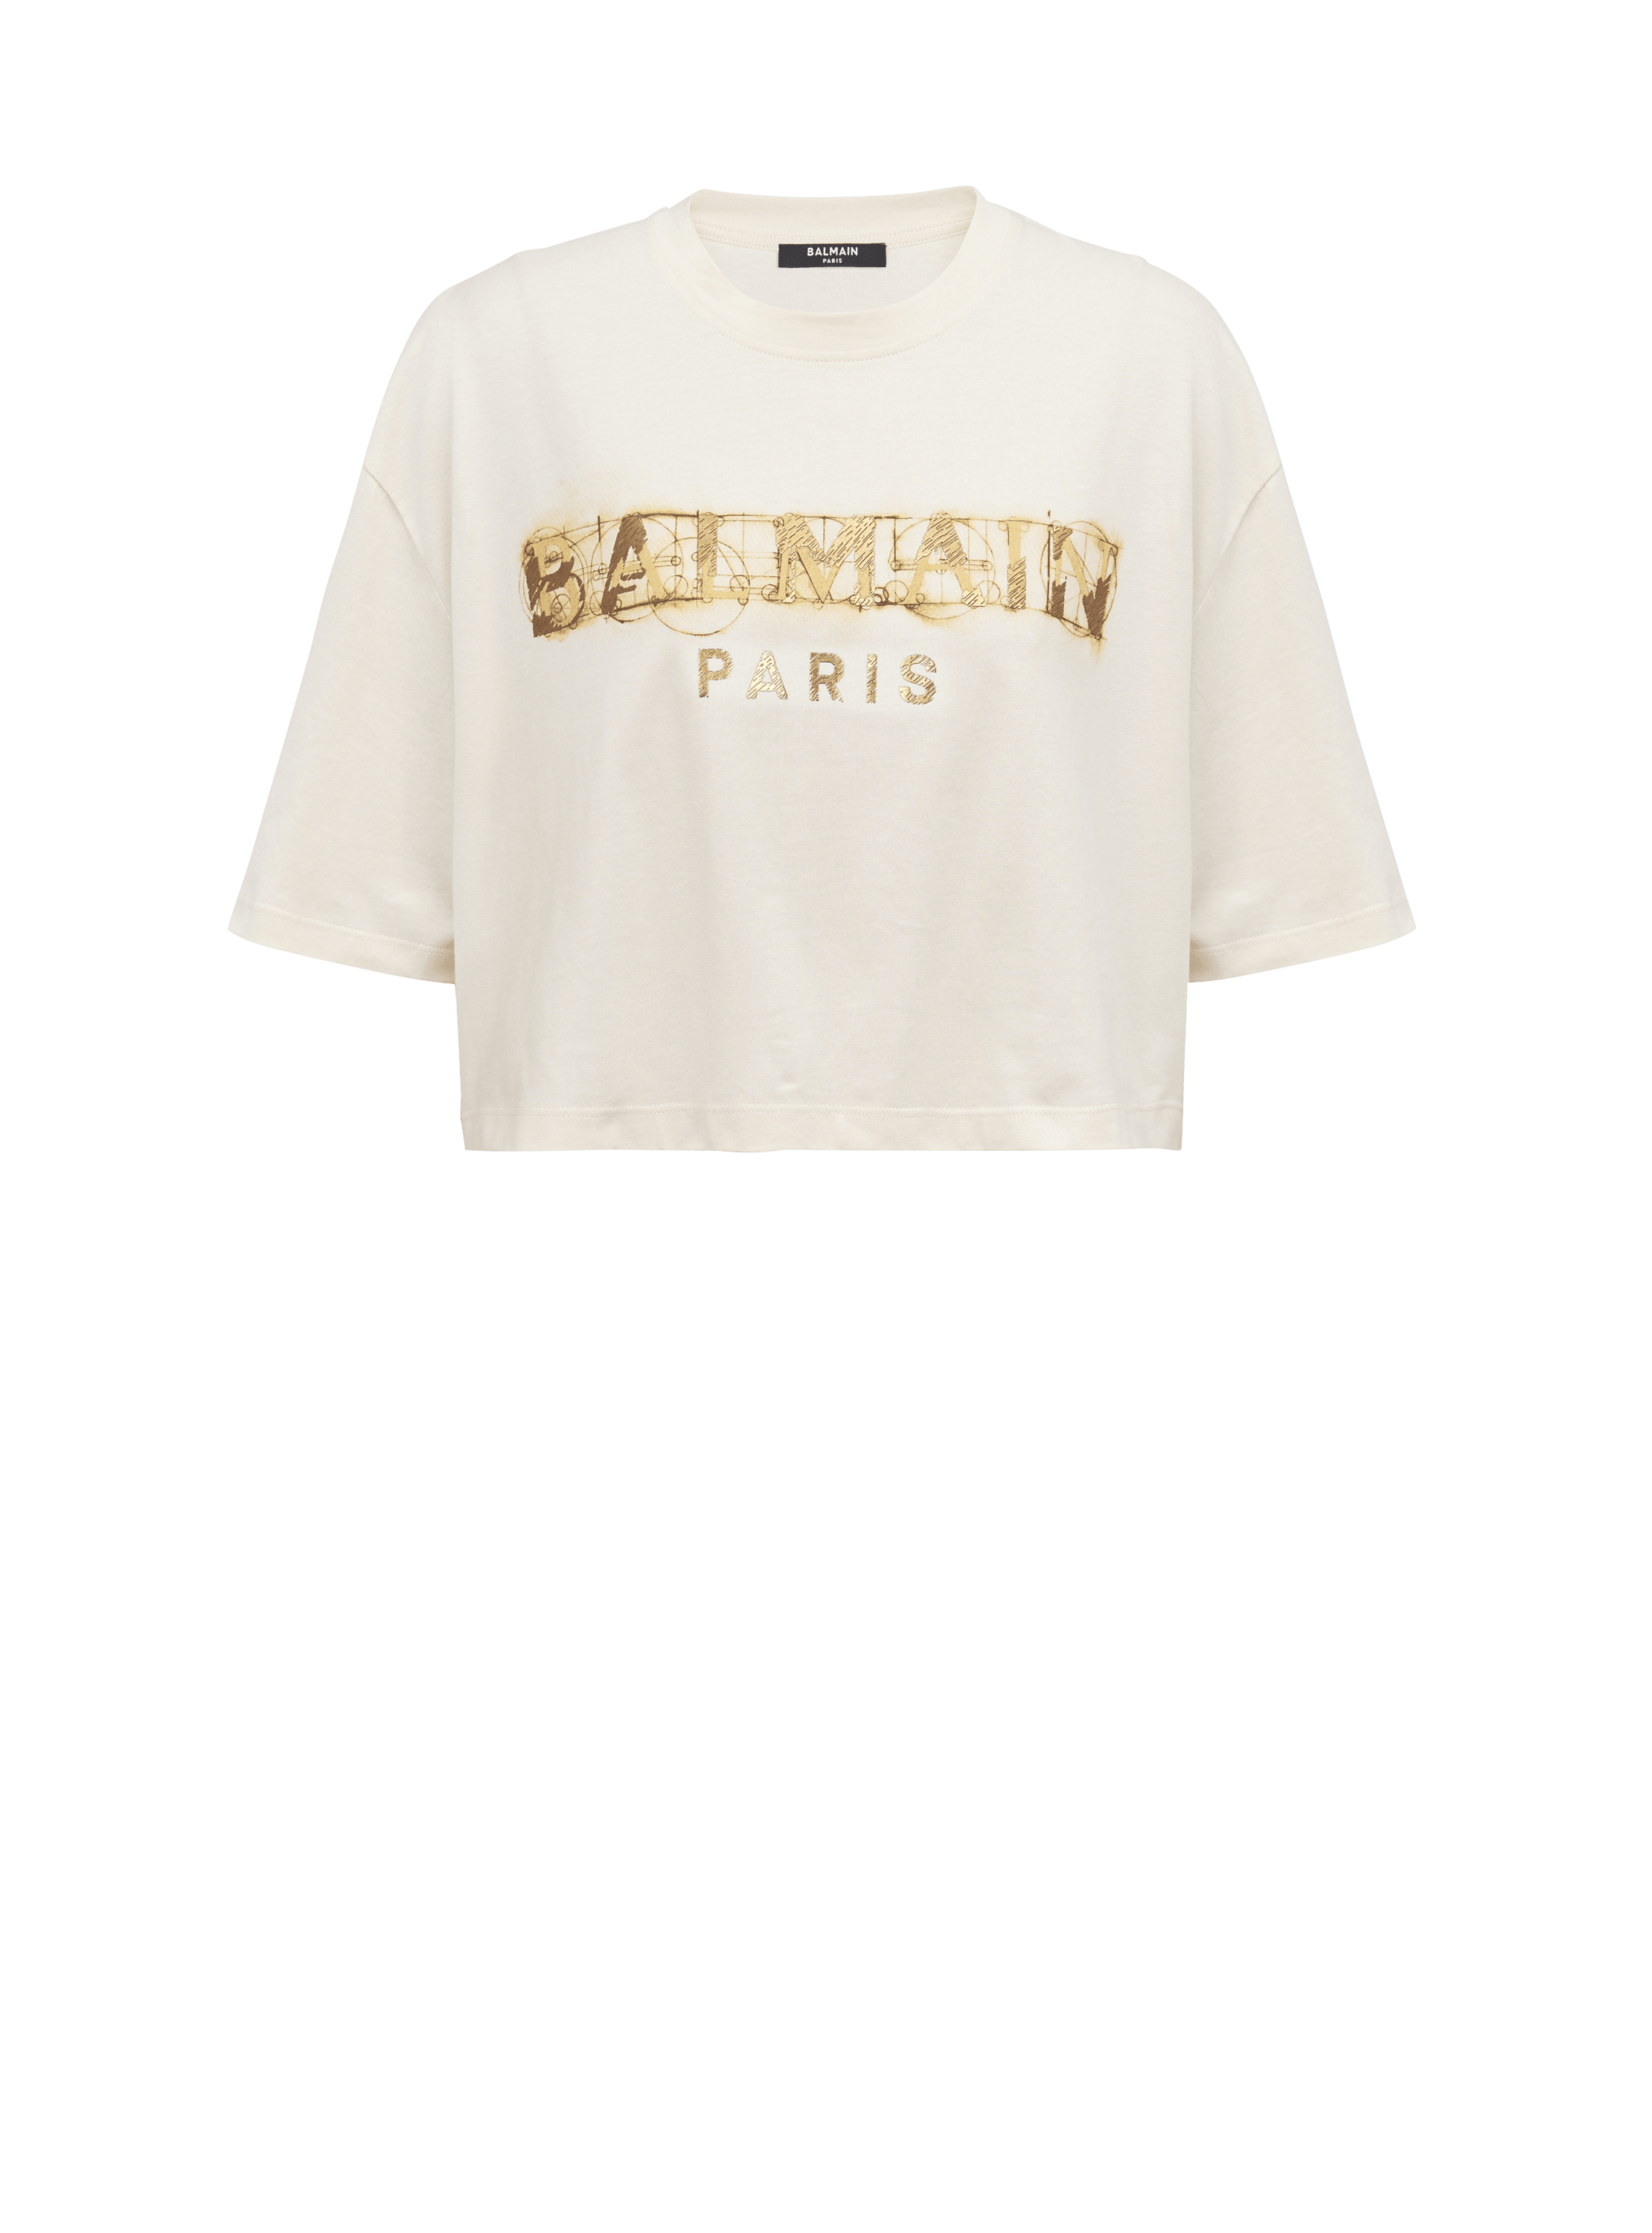 T-shirt corta con stampa Balmain metallizzata, beige, hi-res